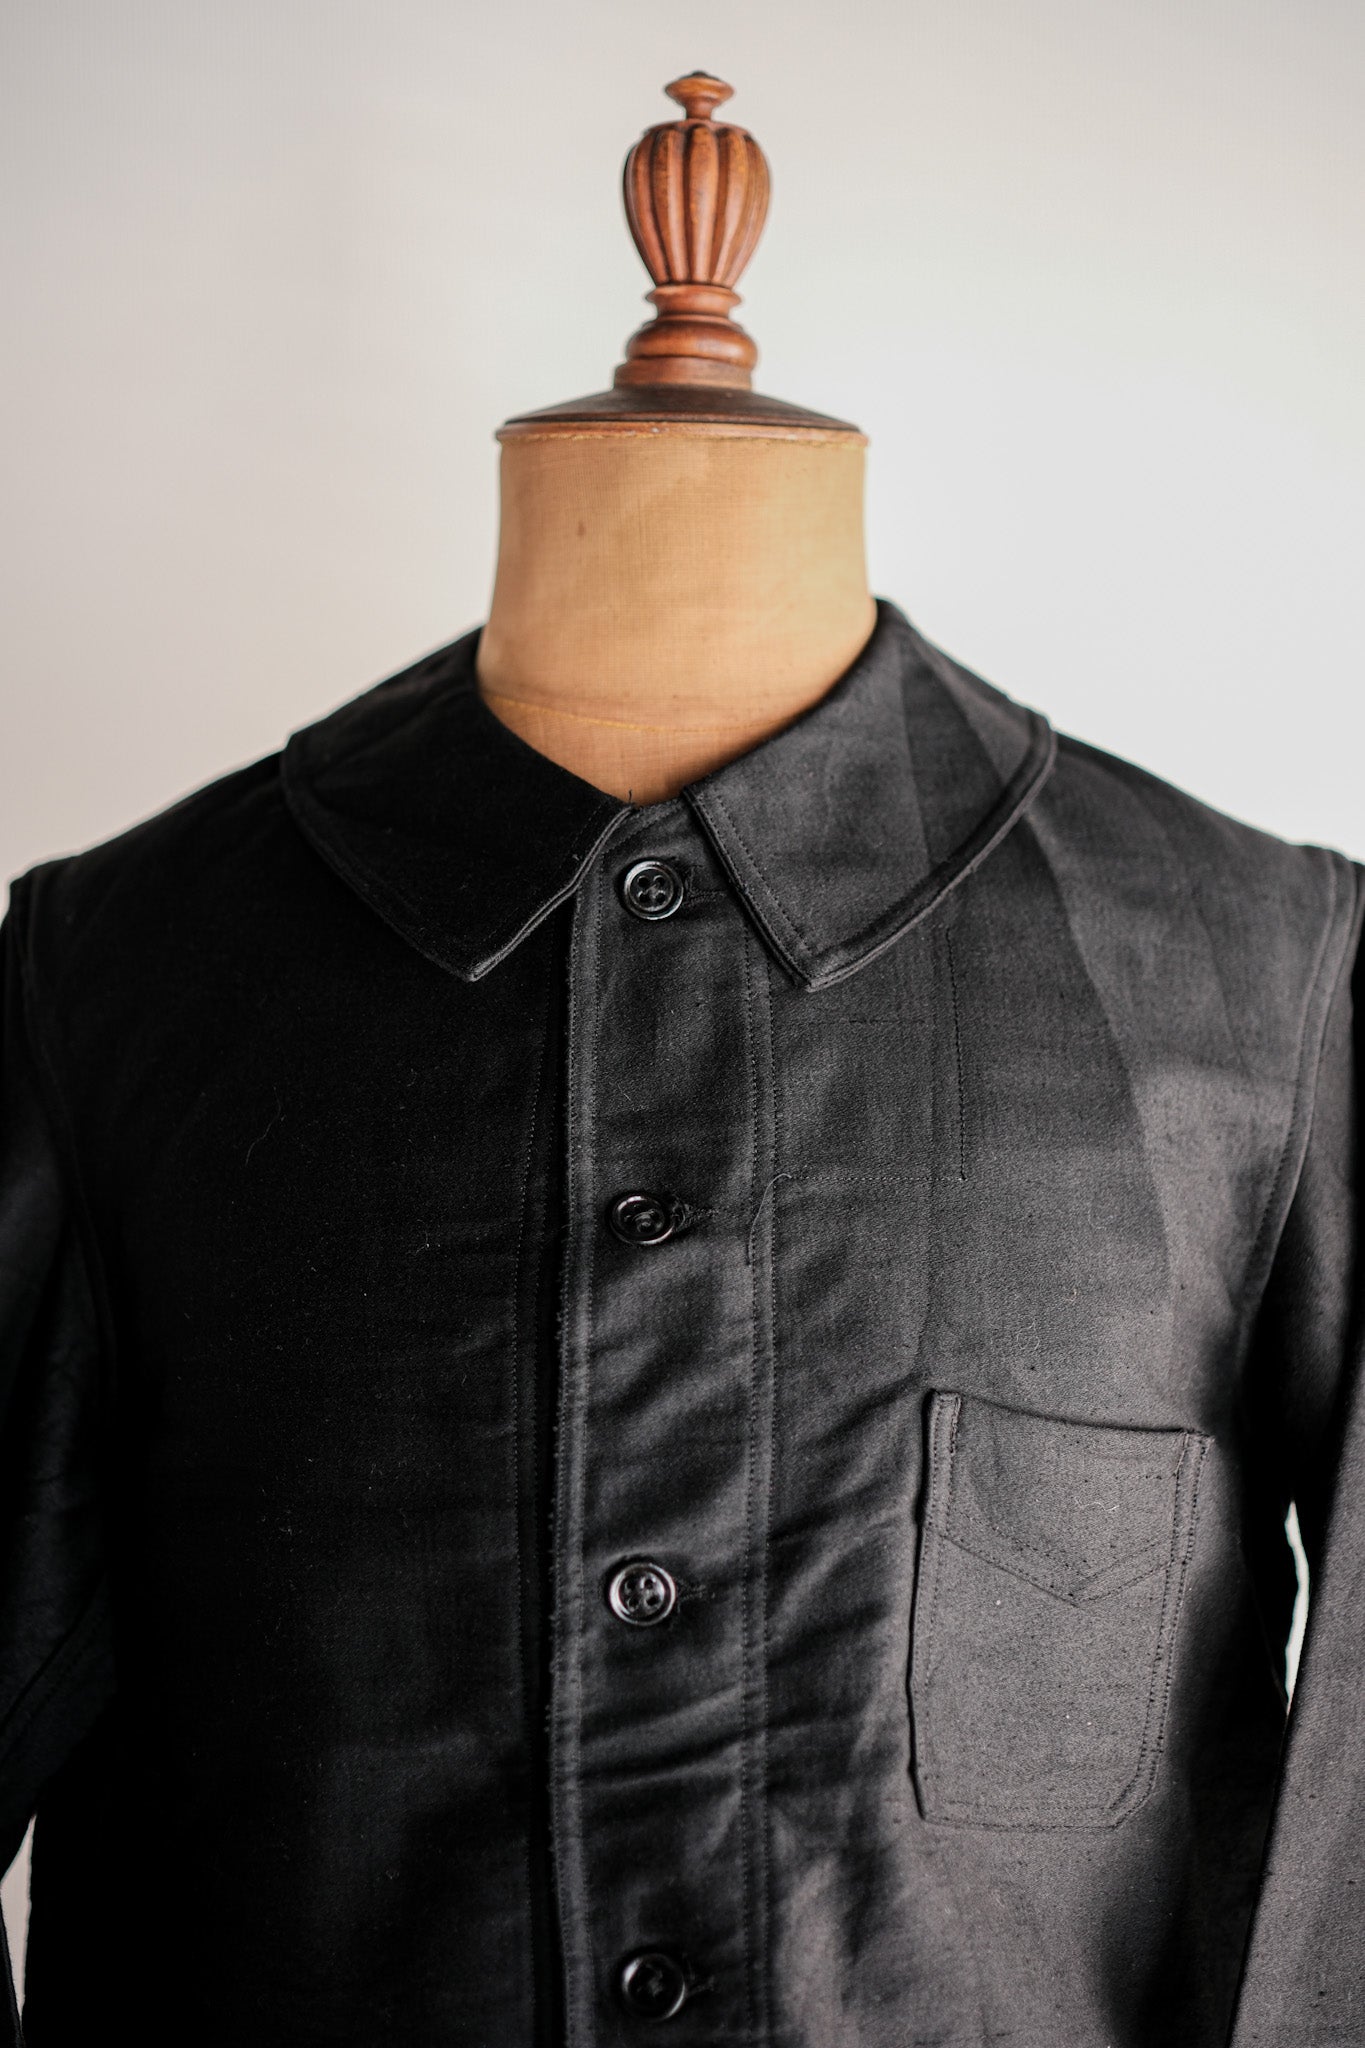 [~ 40's] French Vintage Black Moleskin Work Jacket "Le Mont St. Michel"